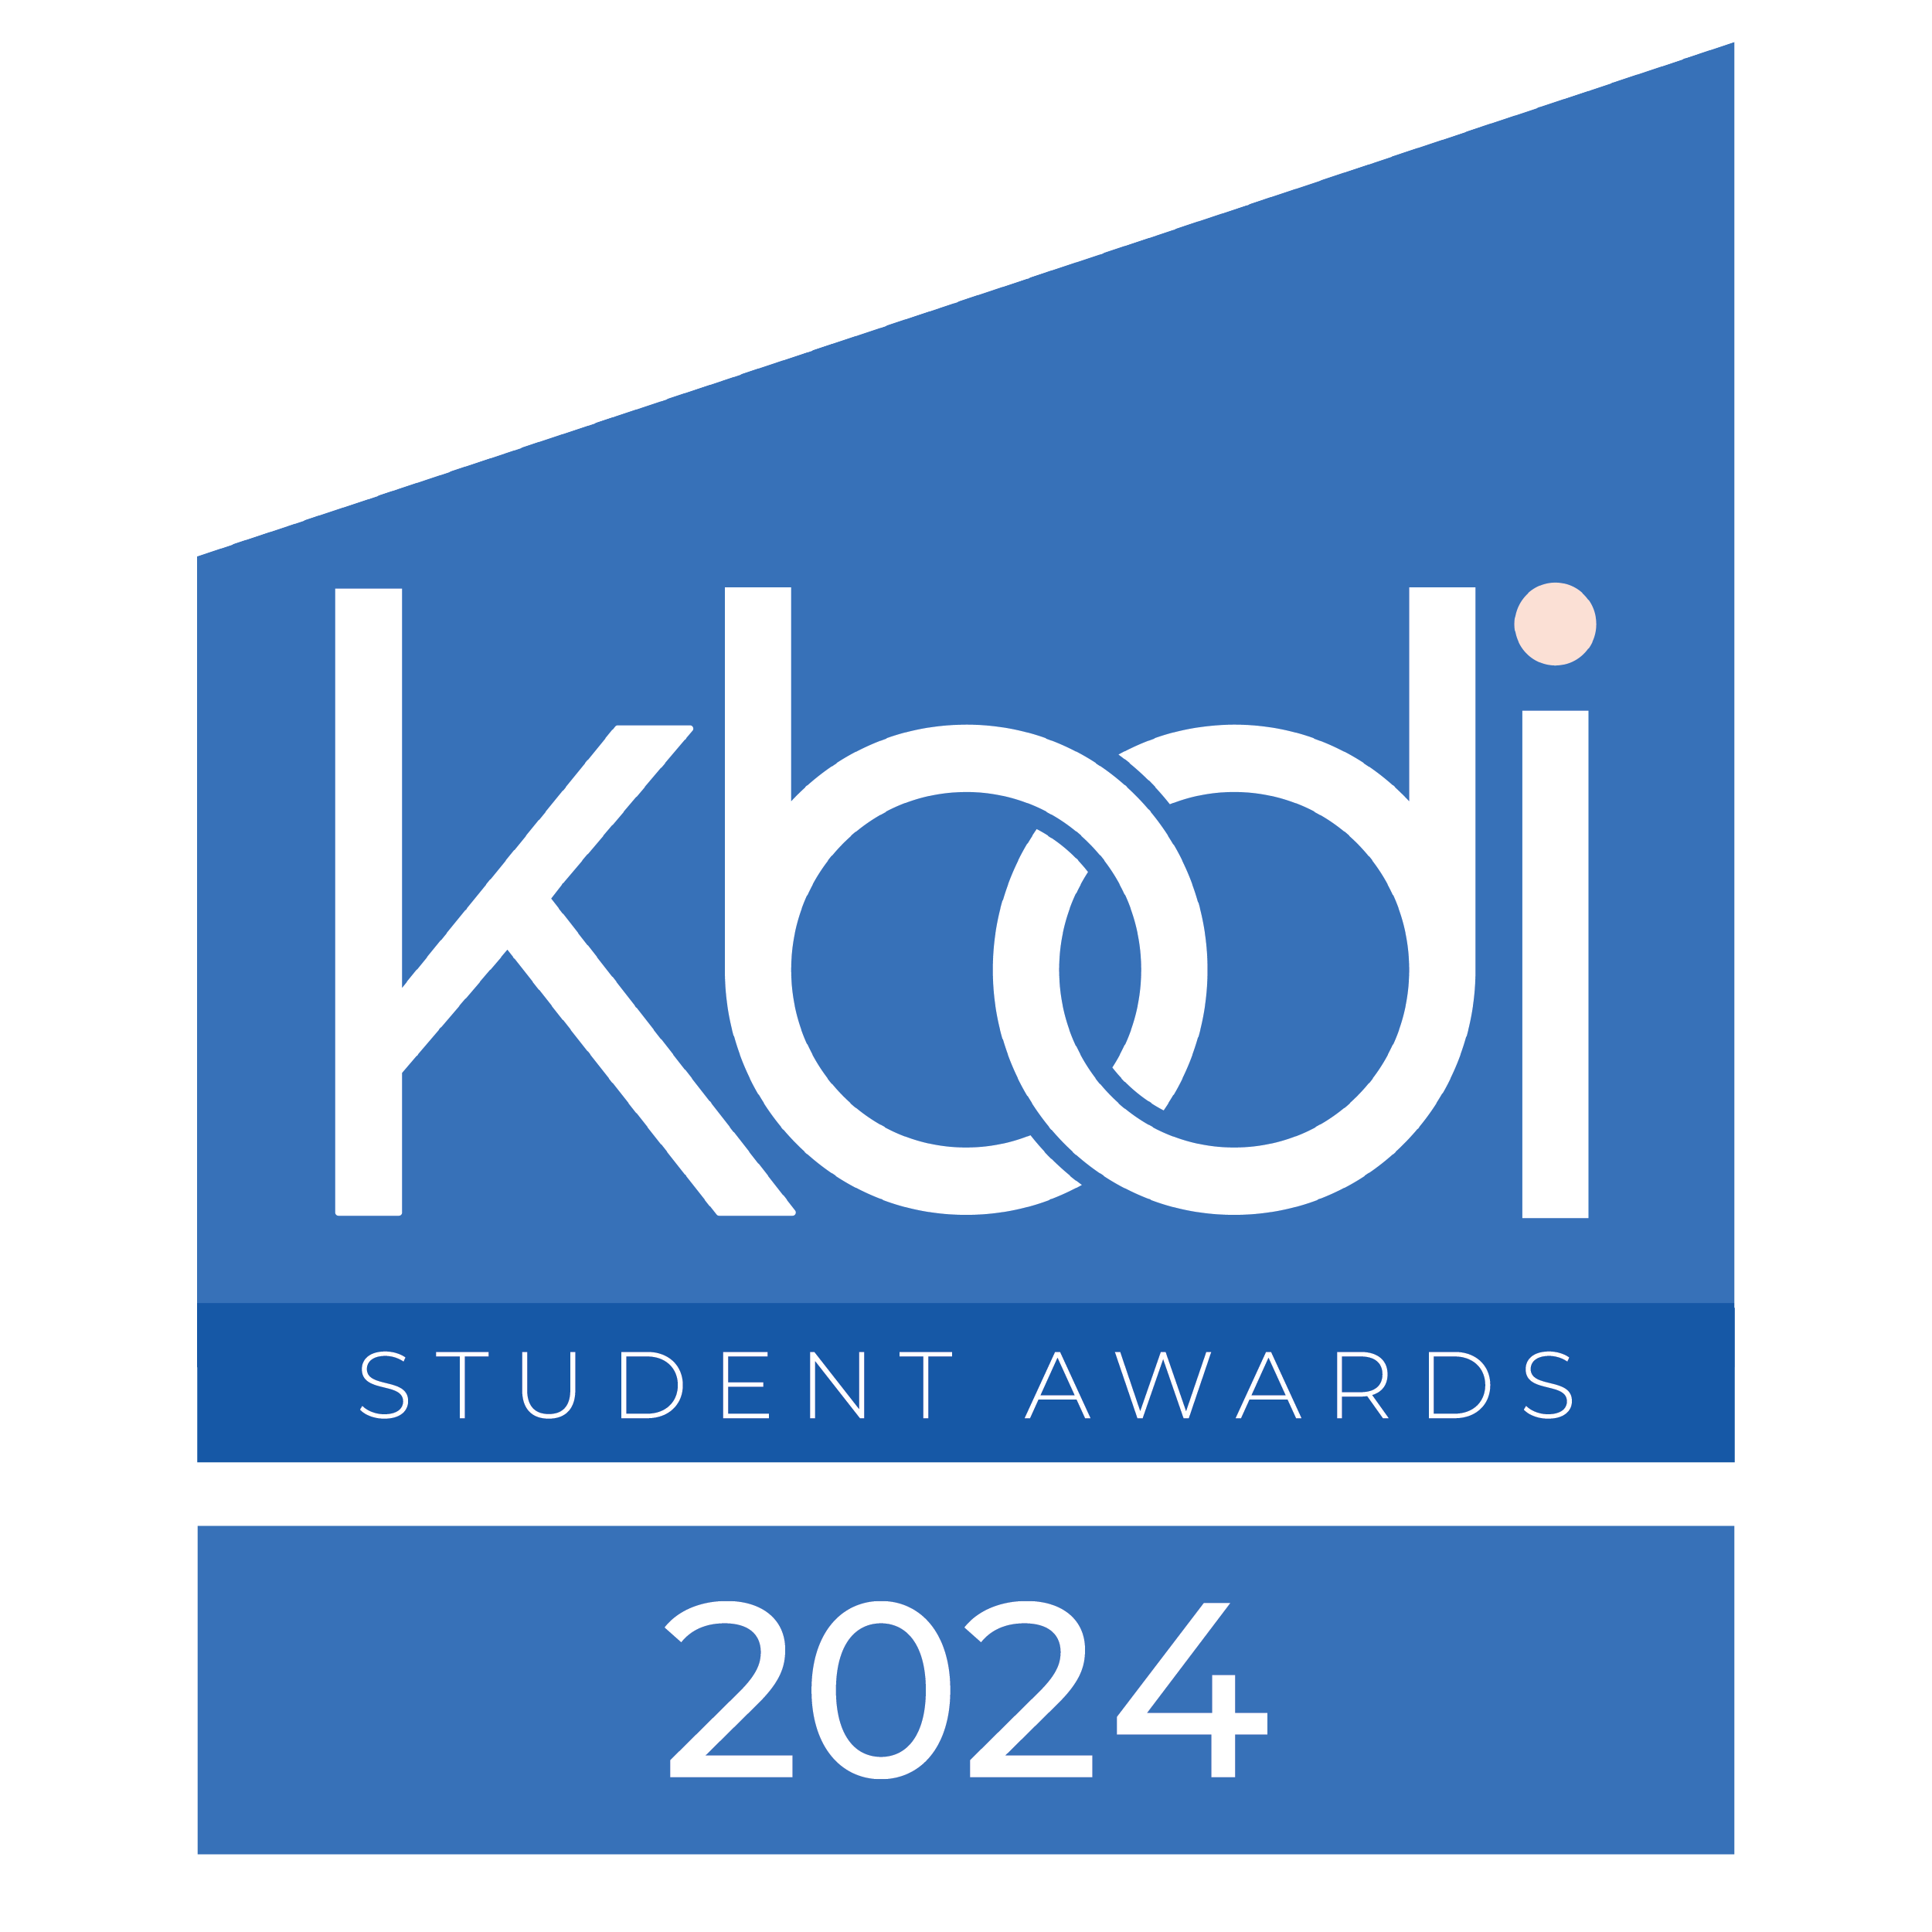 KBDi Student Awards 2024